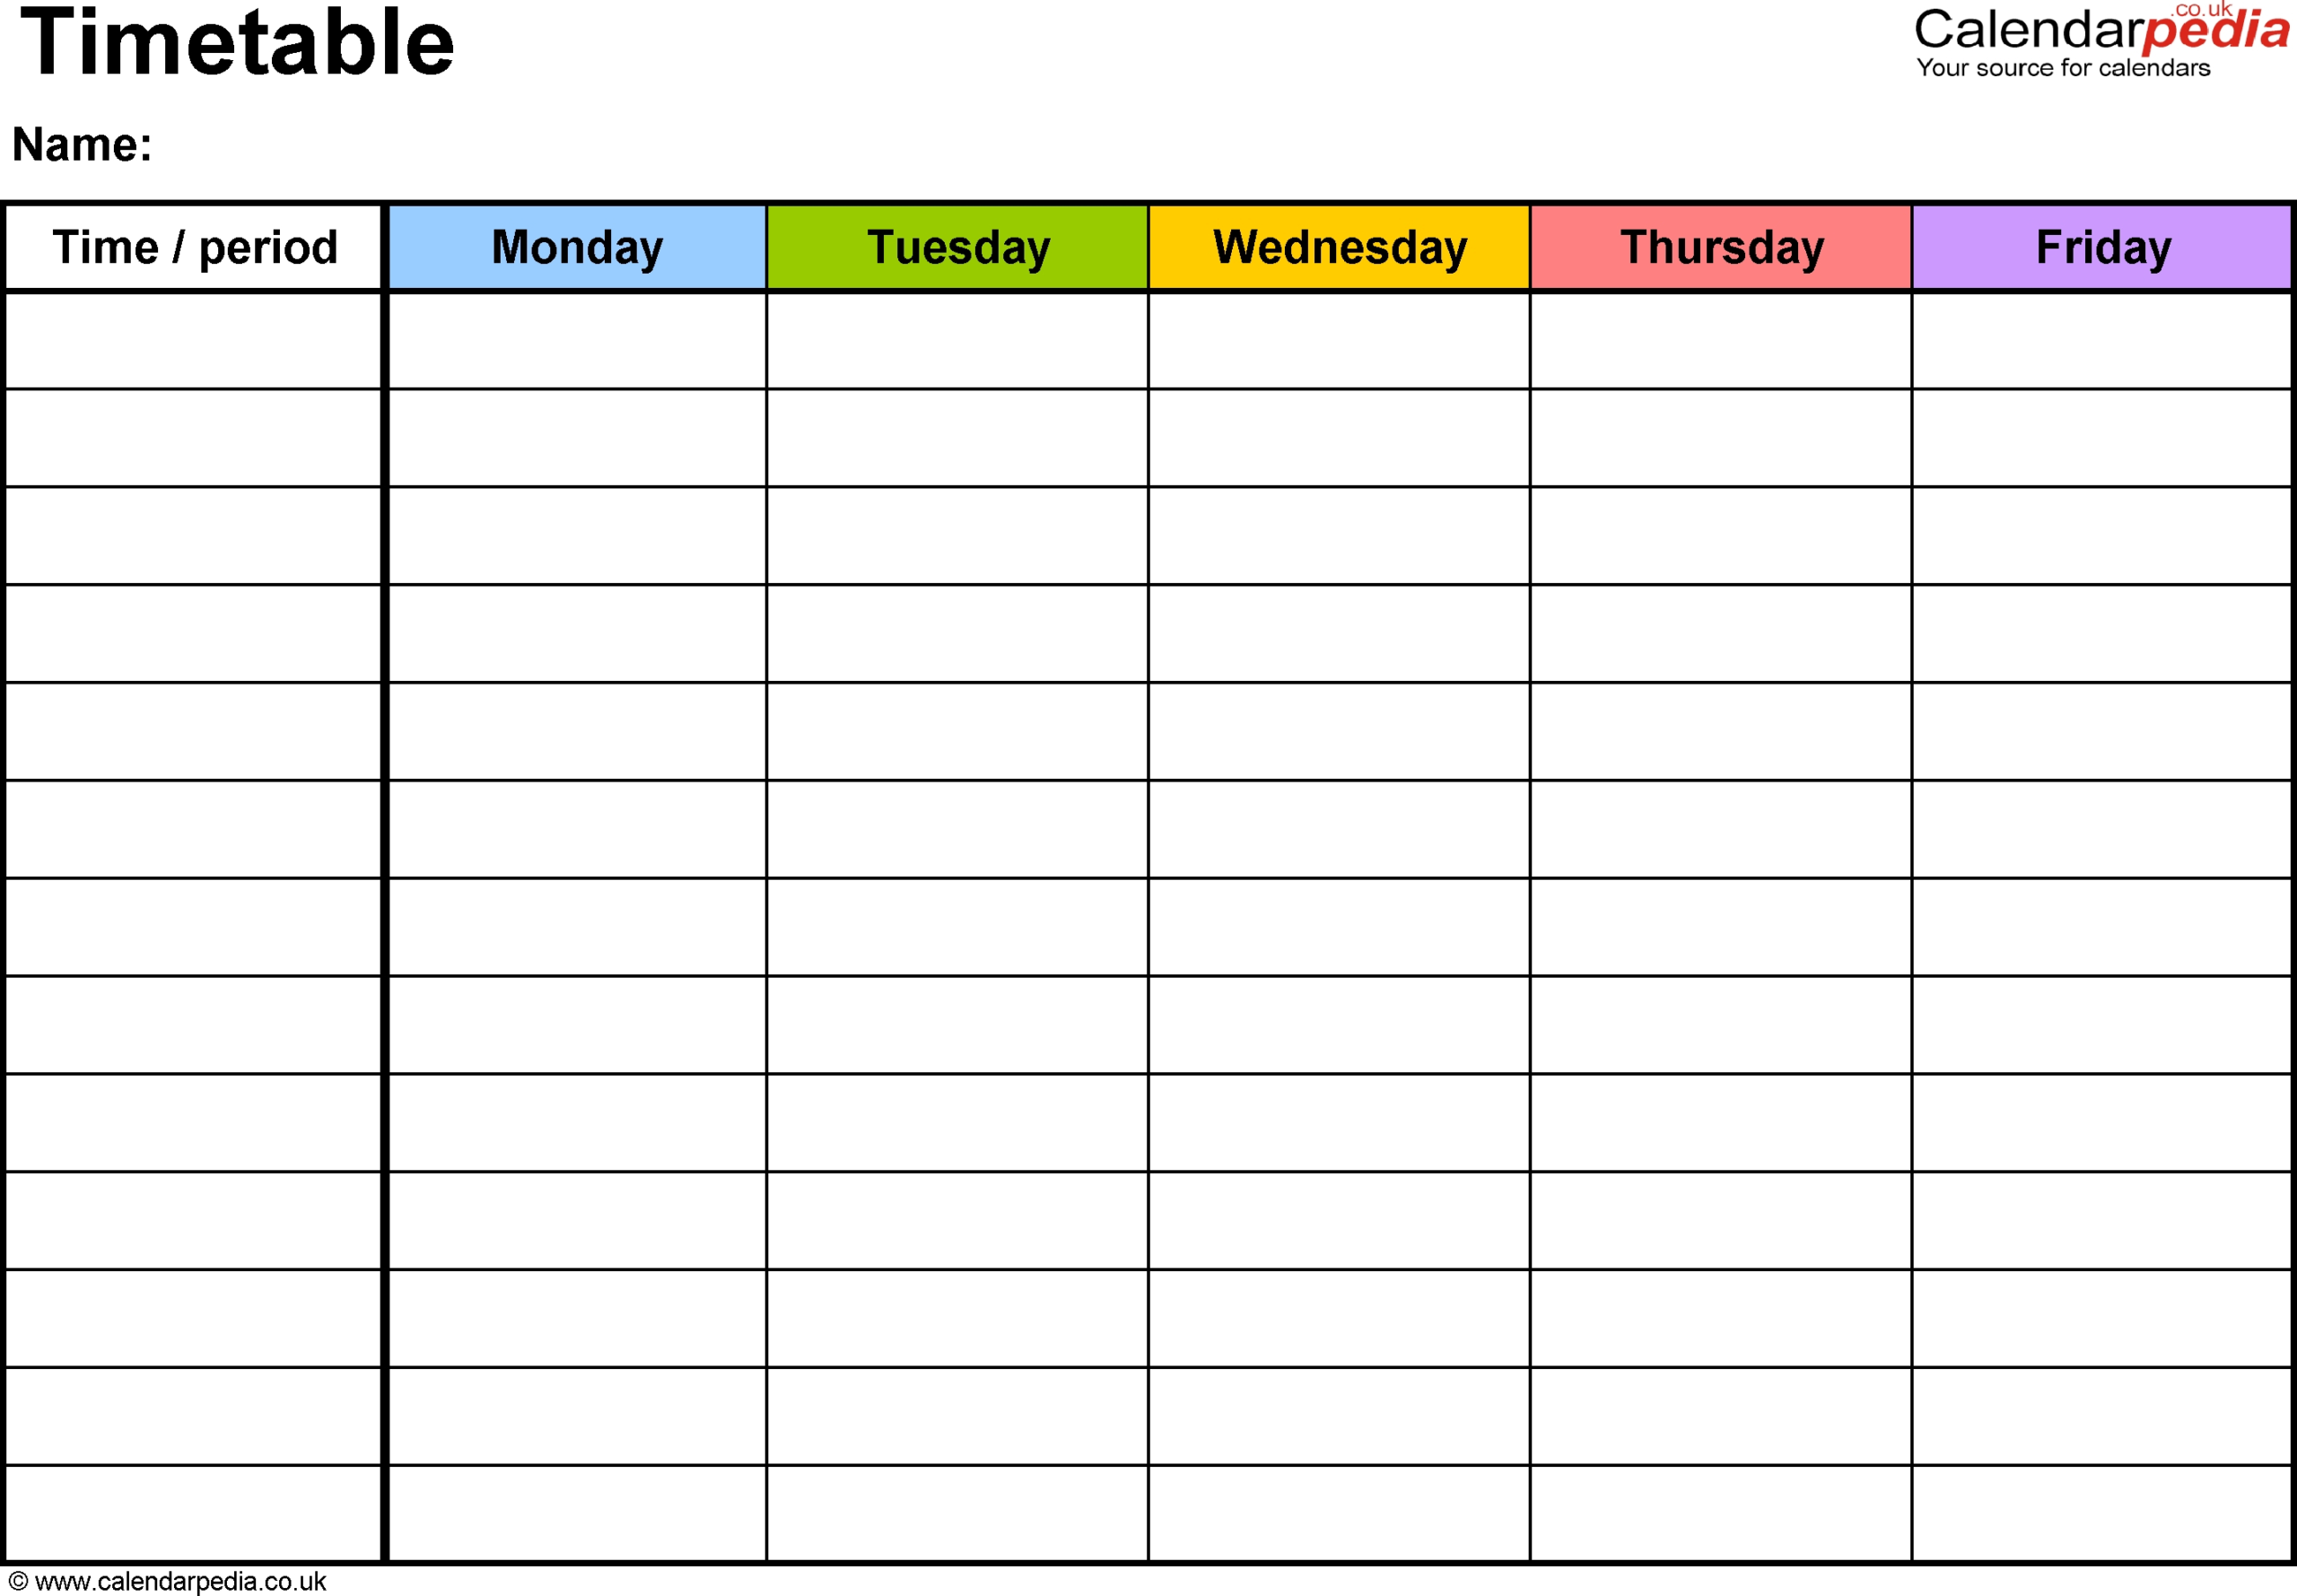 Blank Calendar Monday To Friday | Calendar Template Printable intended for Blank Calendar Printable Monday To Friday